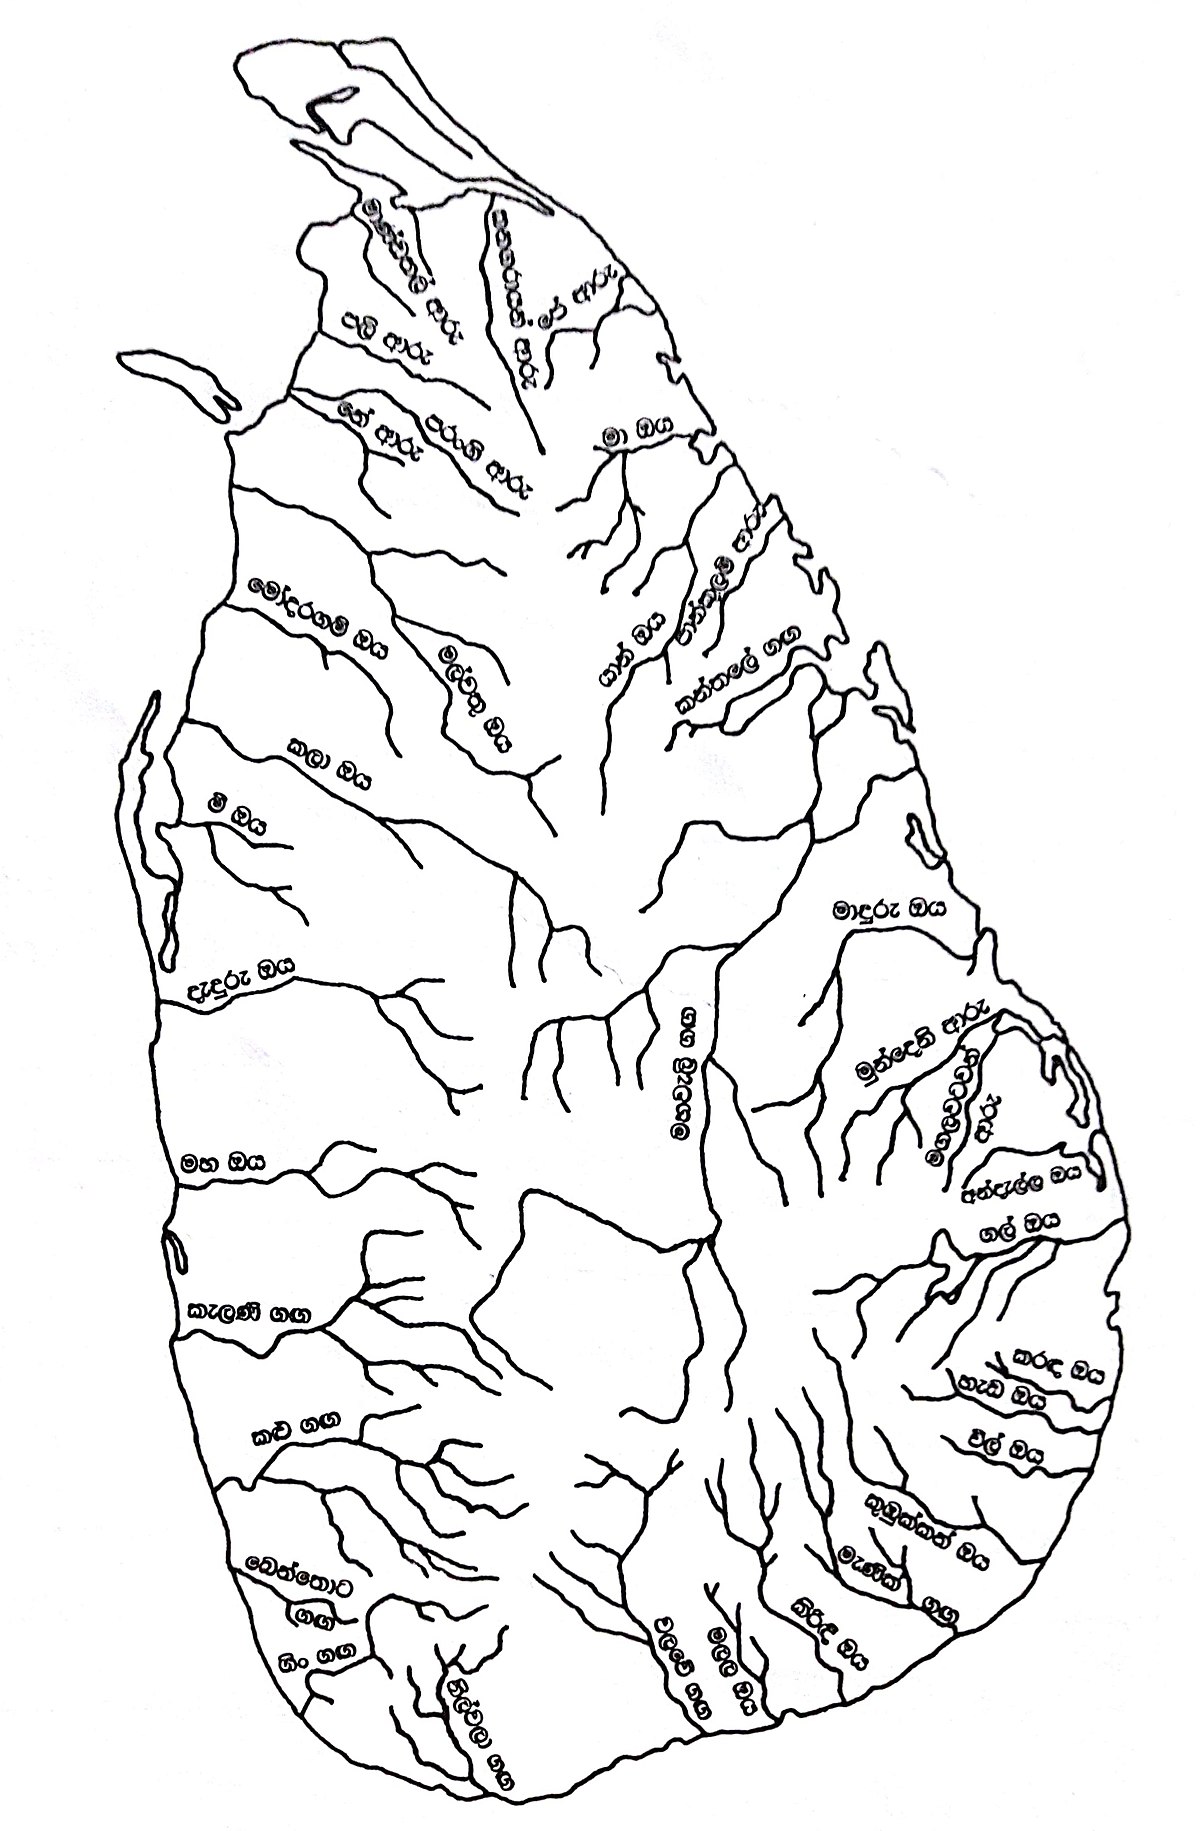 Sri lanka river map sinahla